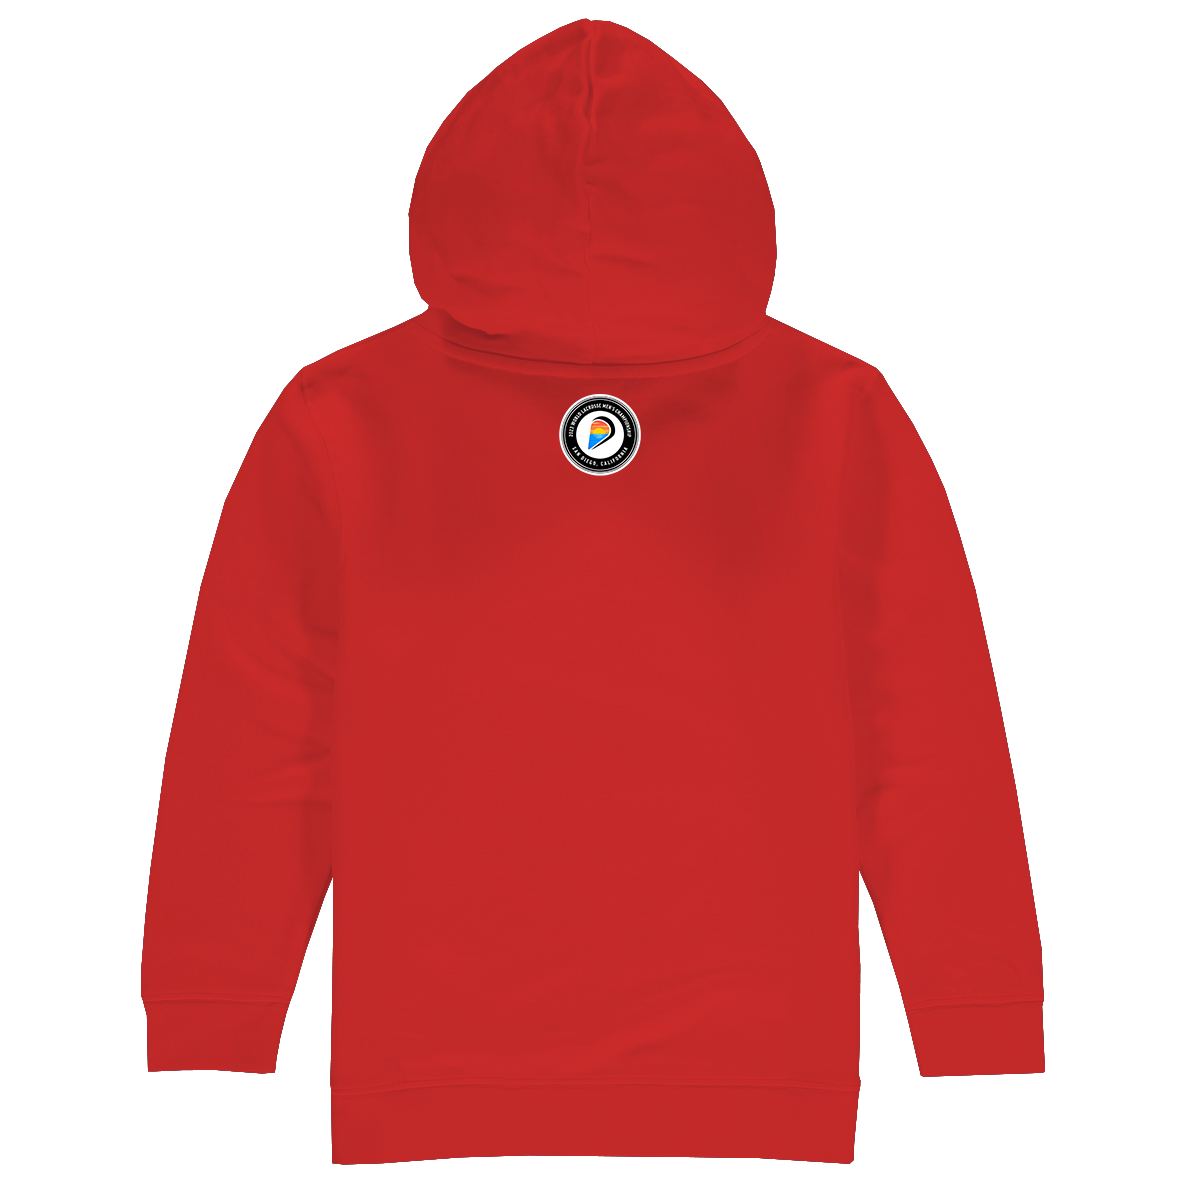 Puerto Rico Premium Unisex Hoodie Sweatshirt Red